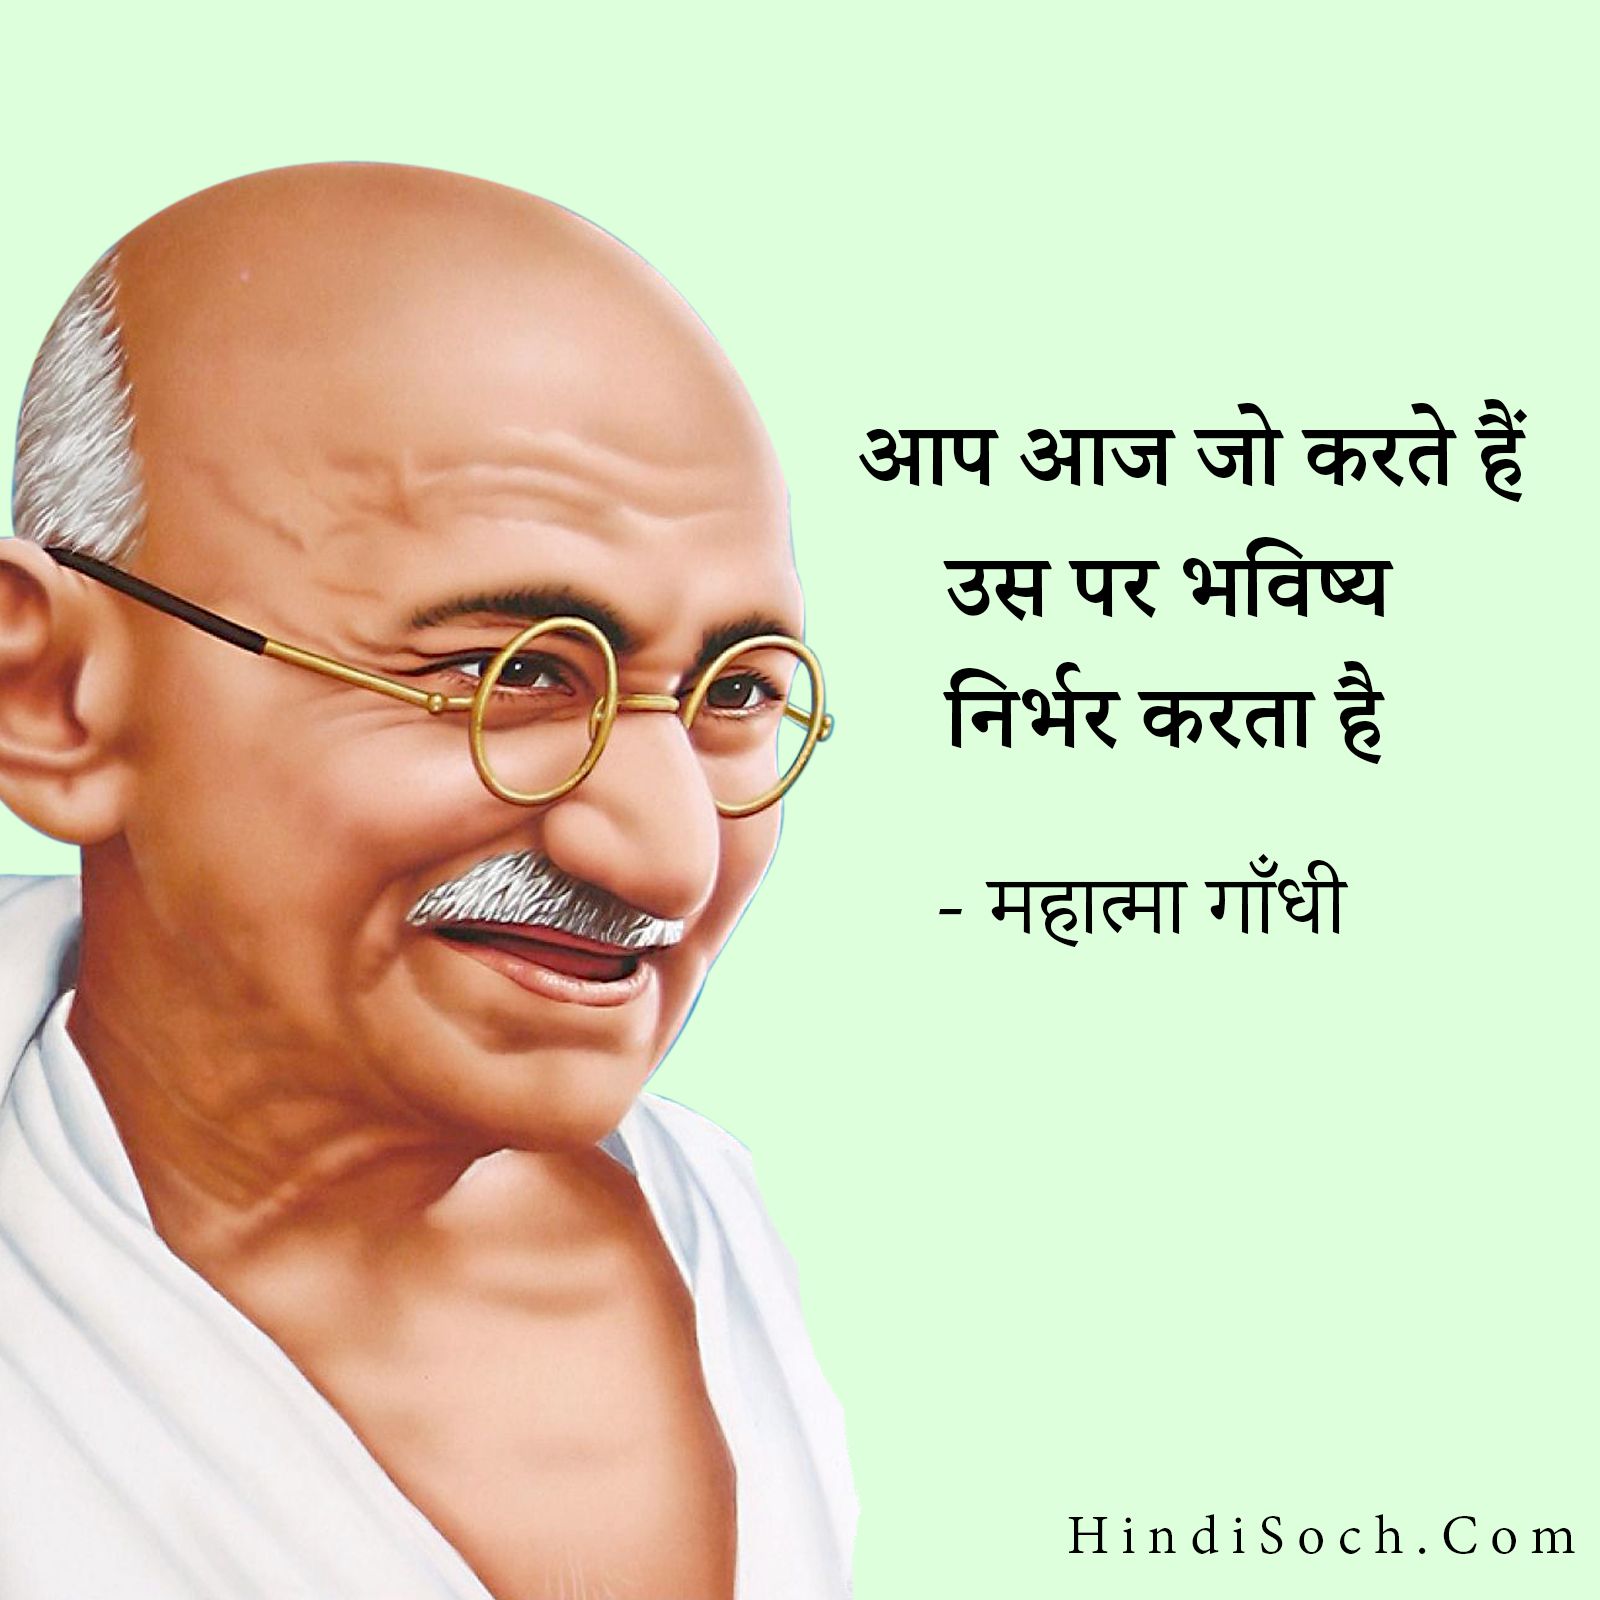 Mahatma Gandhi inspirational quotes in Hindi